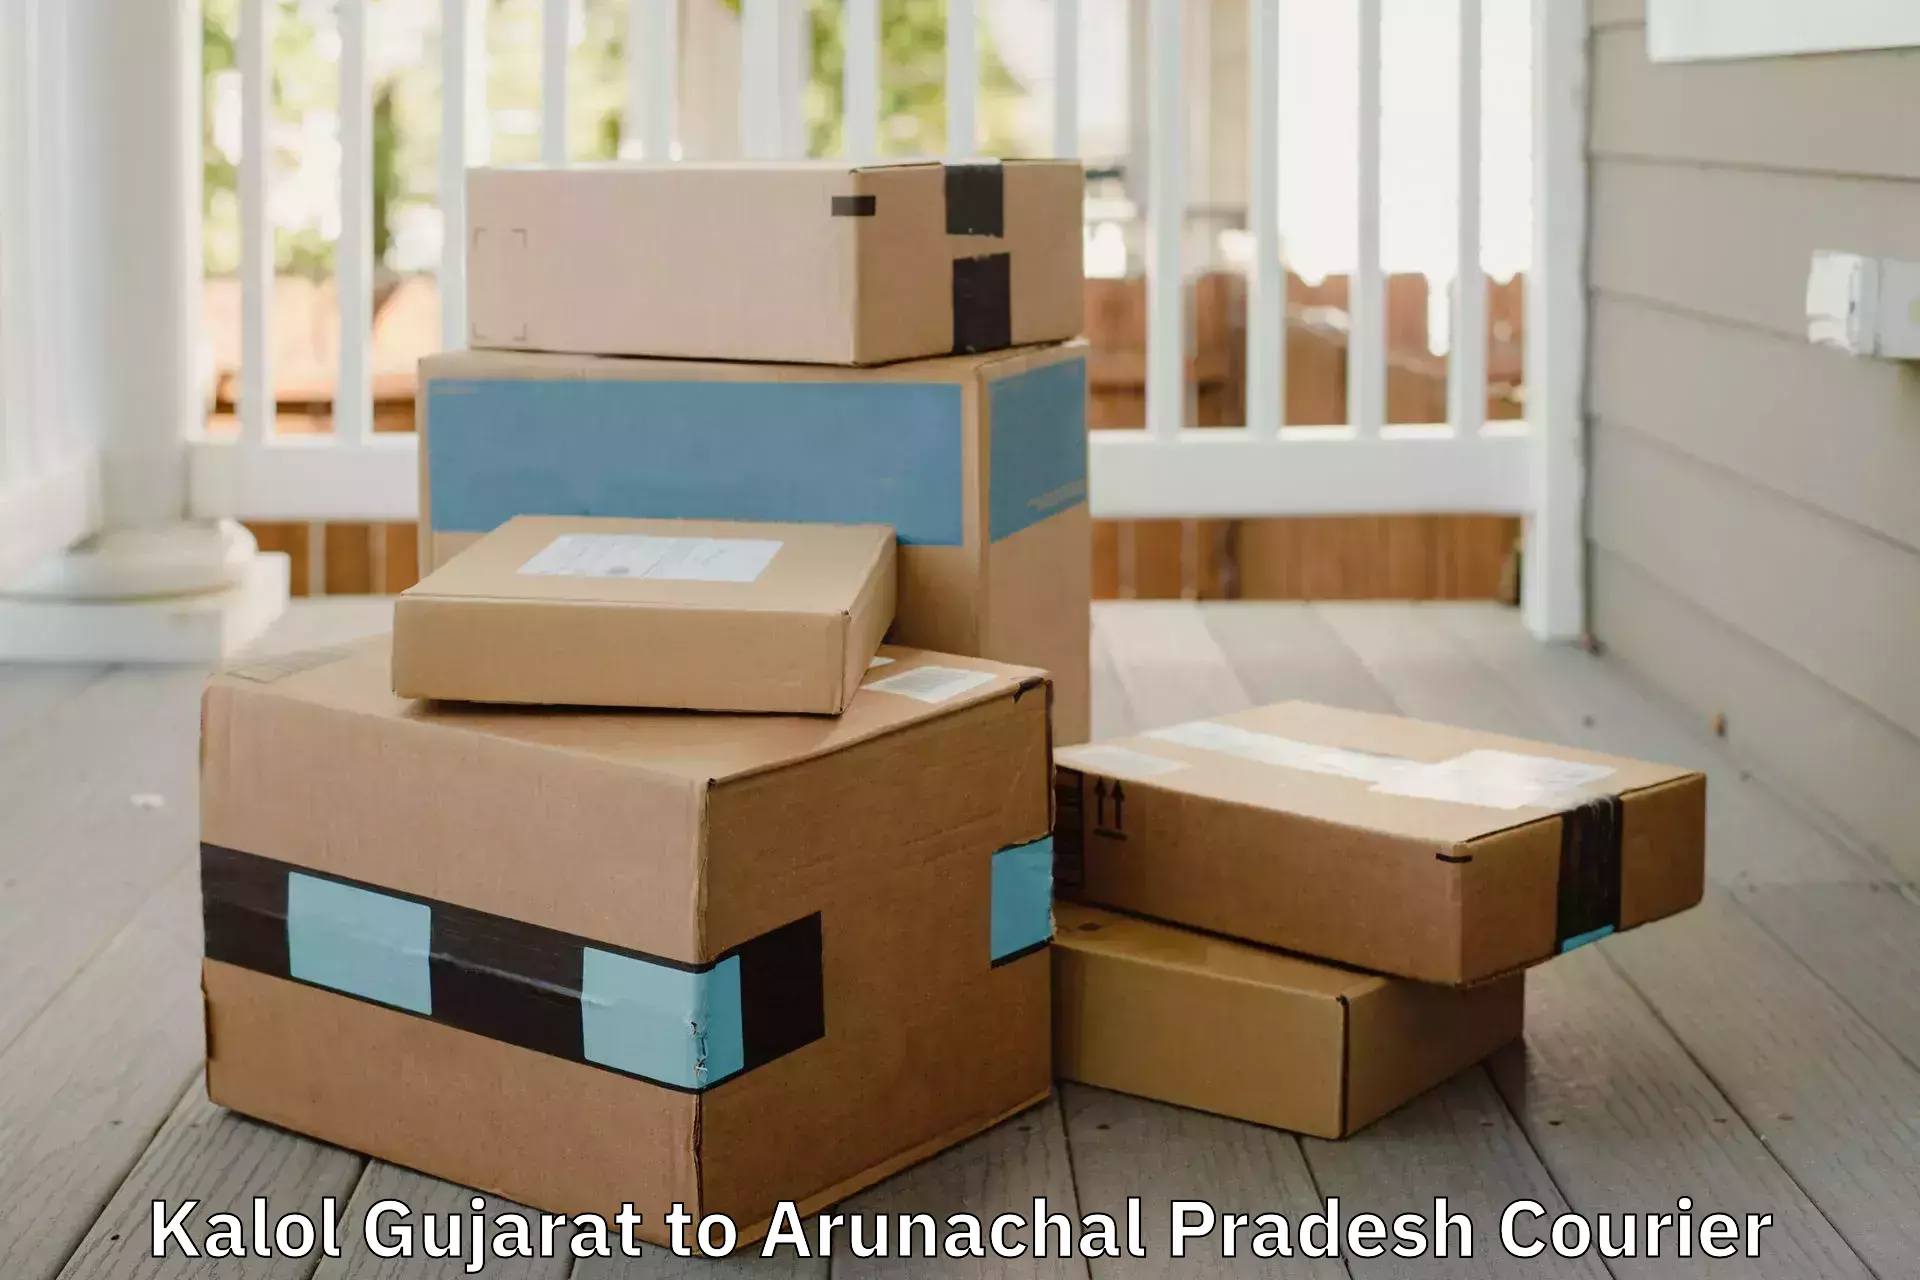 Professional moving company Kalol Gujarat to West Siang